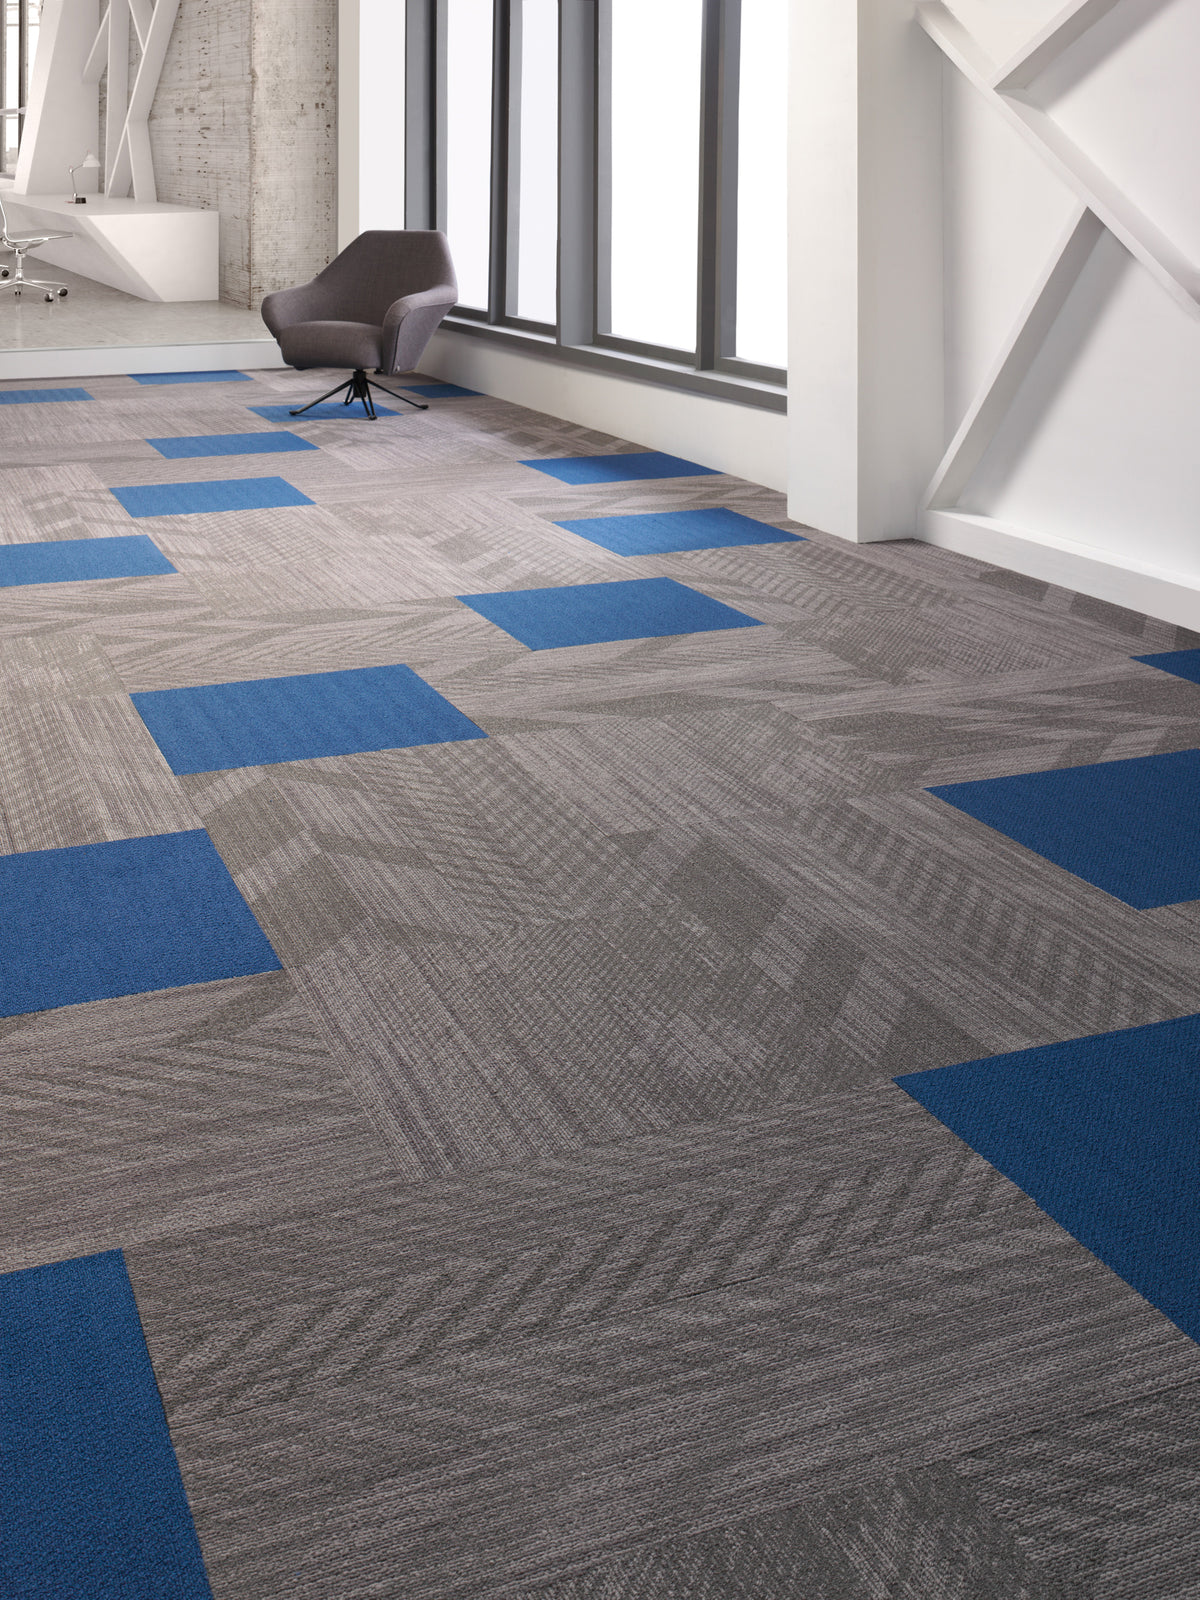 Mohawk Group - Colorbeat - Commercial Carpet Tile - Kingfisher